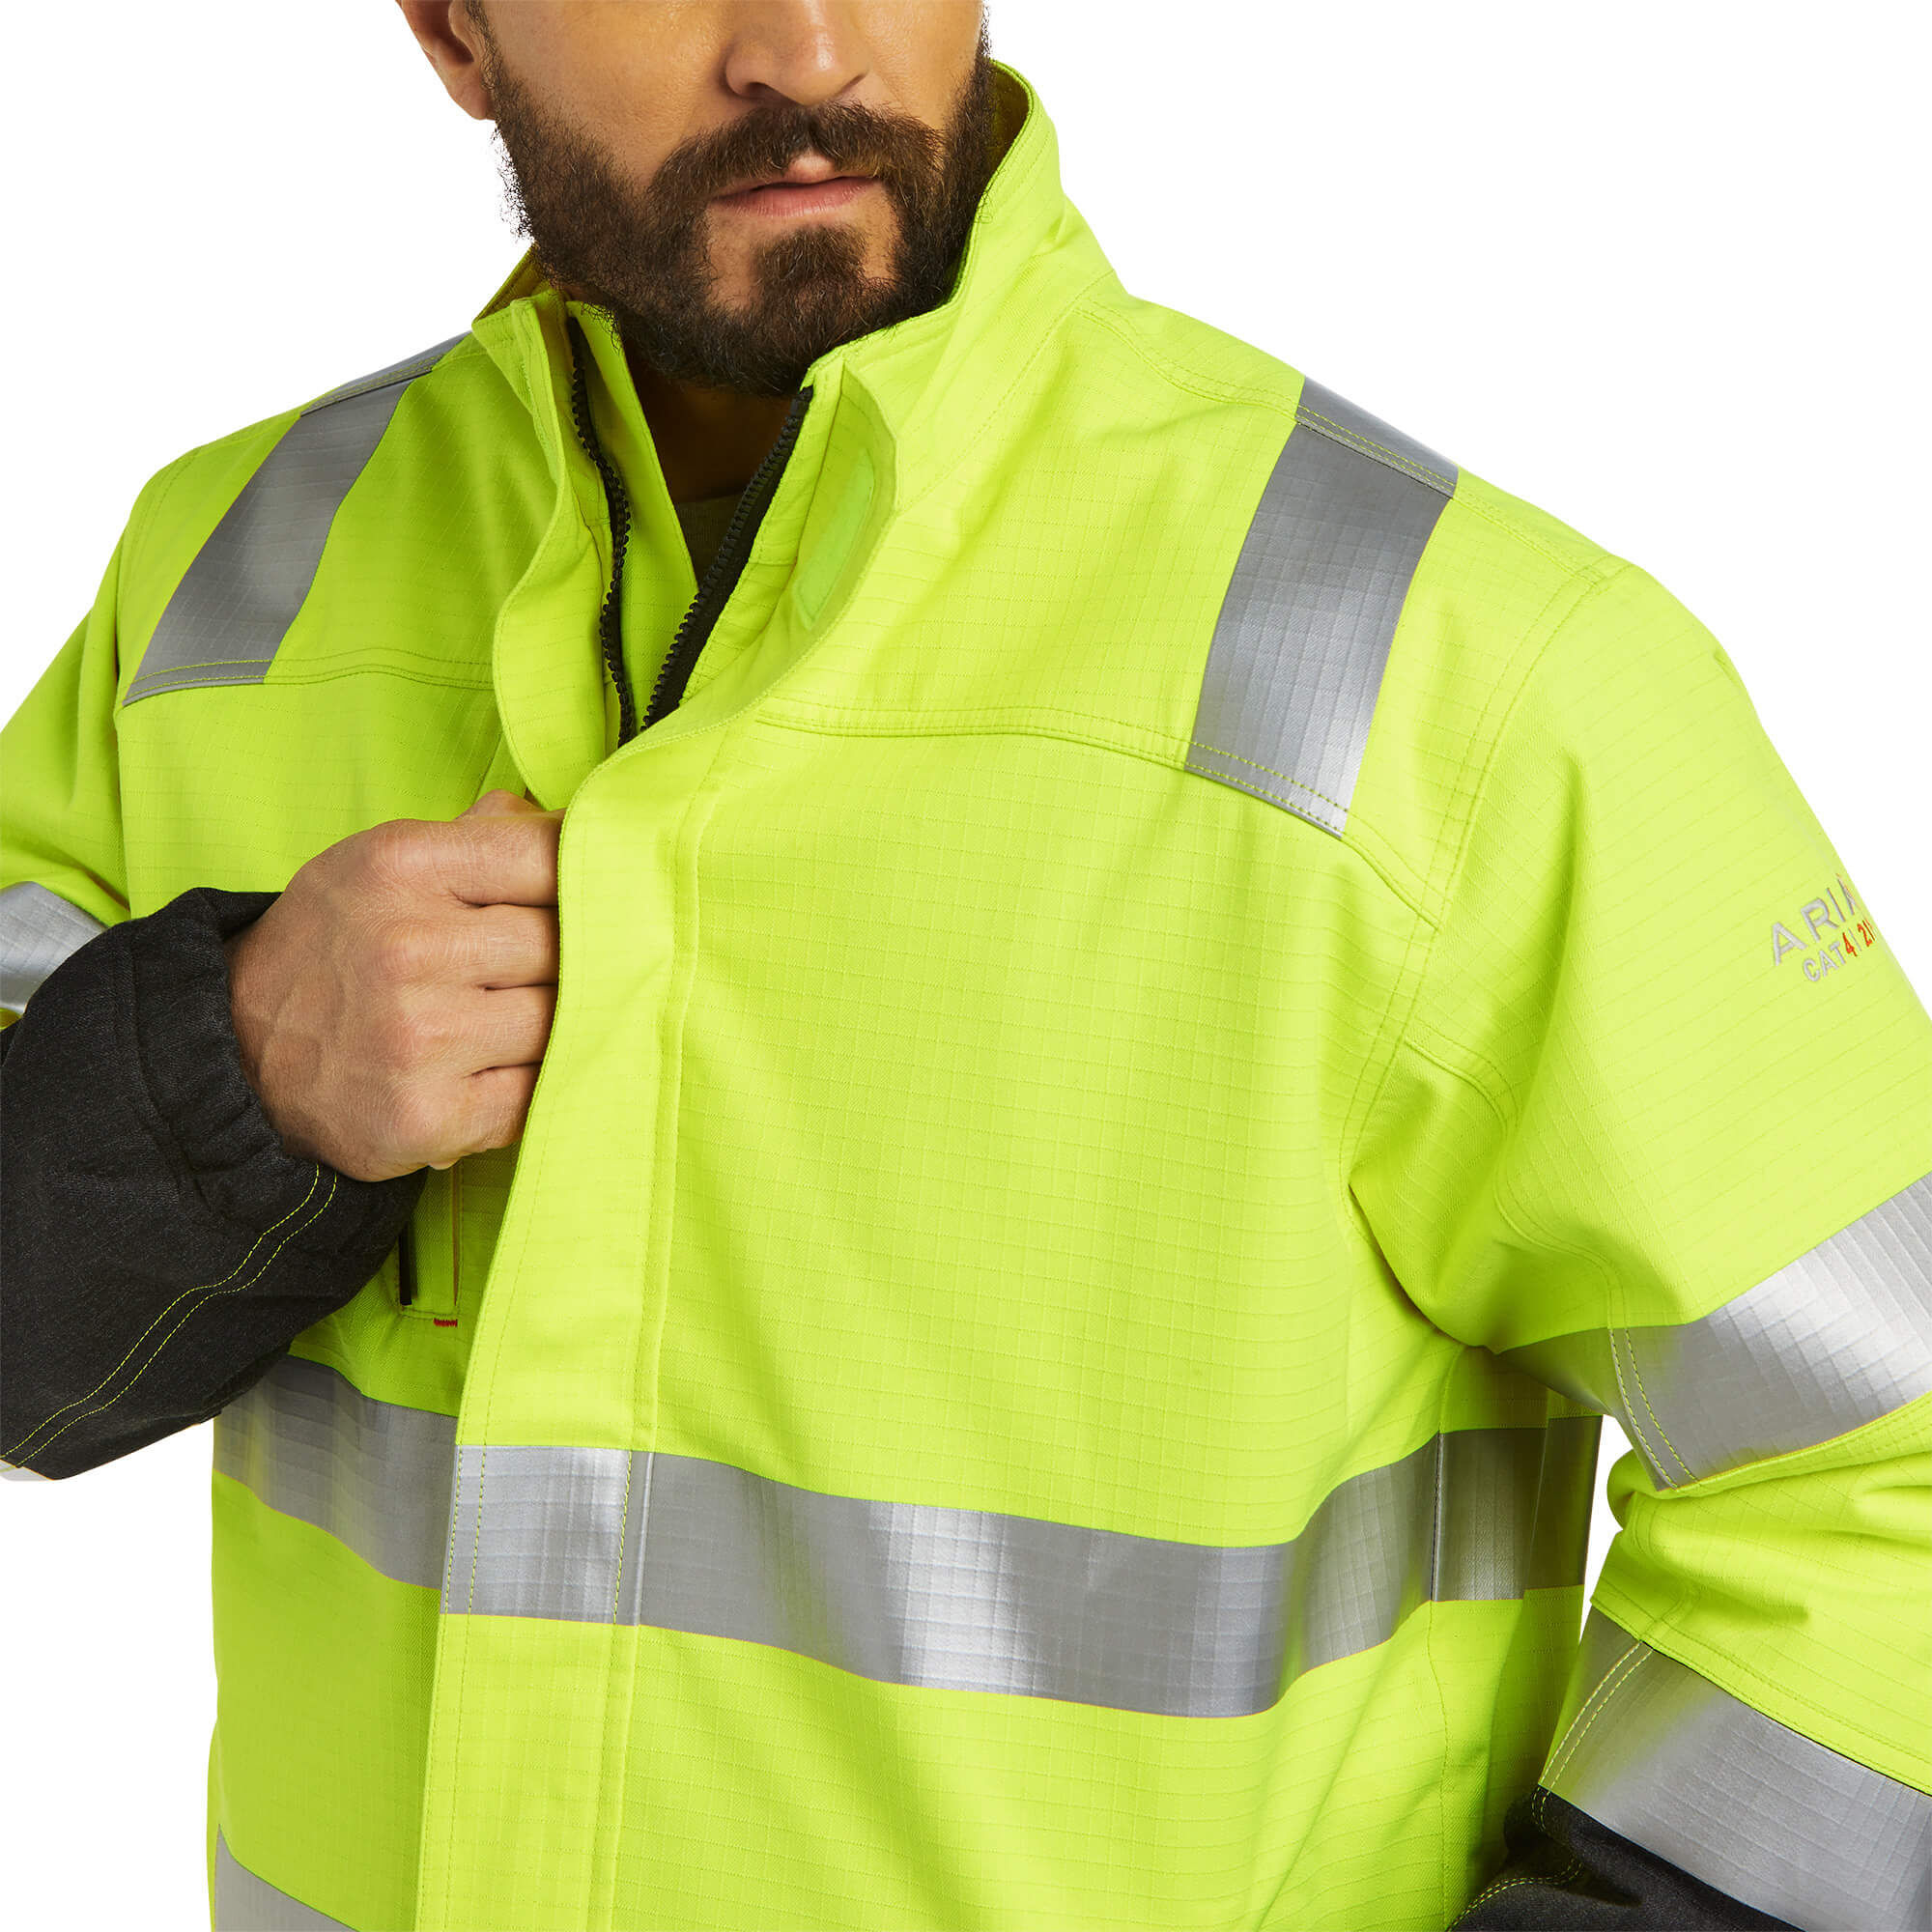 UK Mens Safety Workwear Outdoor High Visibility Zipper Jacket Coat Vest Tops 